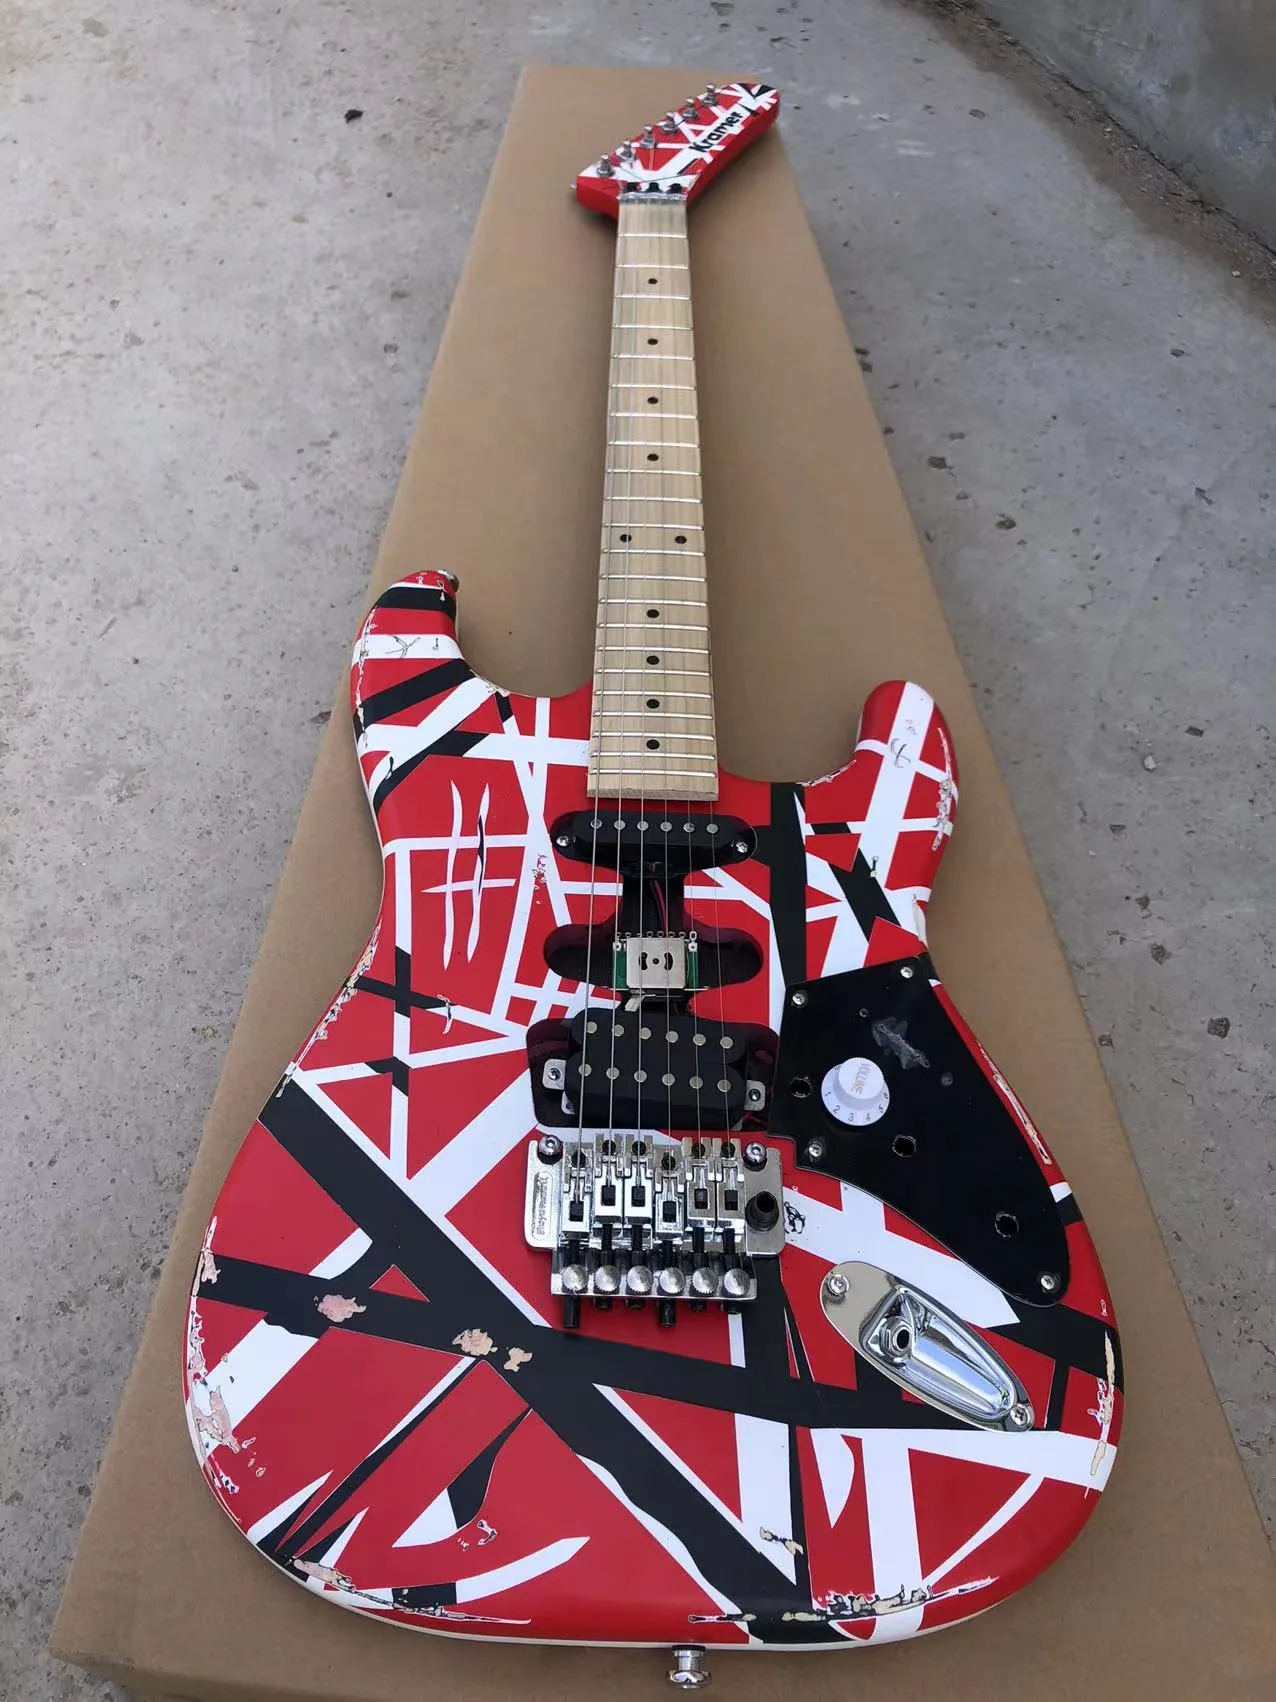 Eddie Van Halen "Fran Ken" Heavy-Duty Relic Electric Guitar/Red Body/Black and White Striped Decoration, Groothandel en Retail